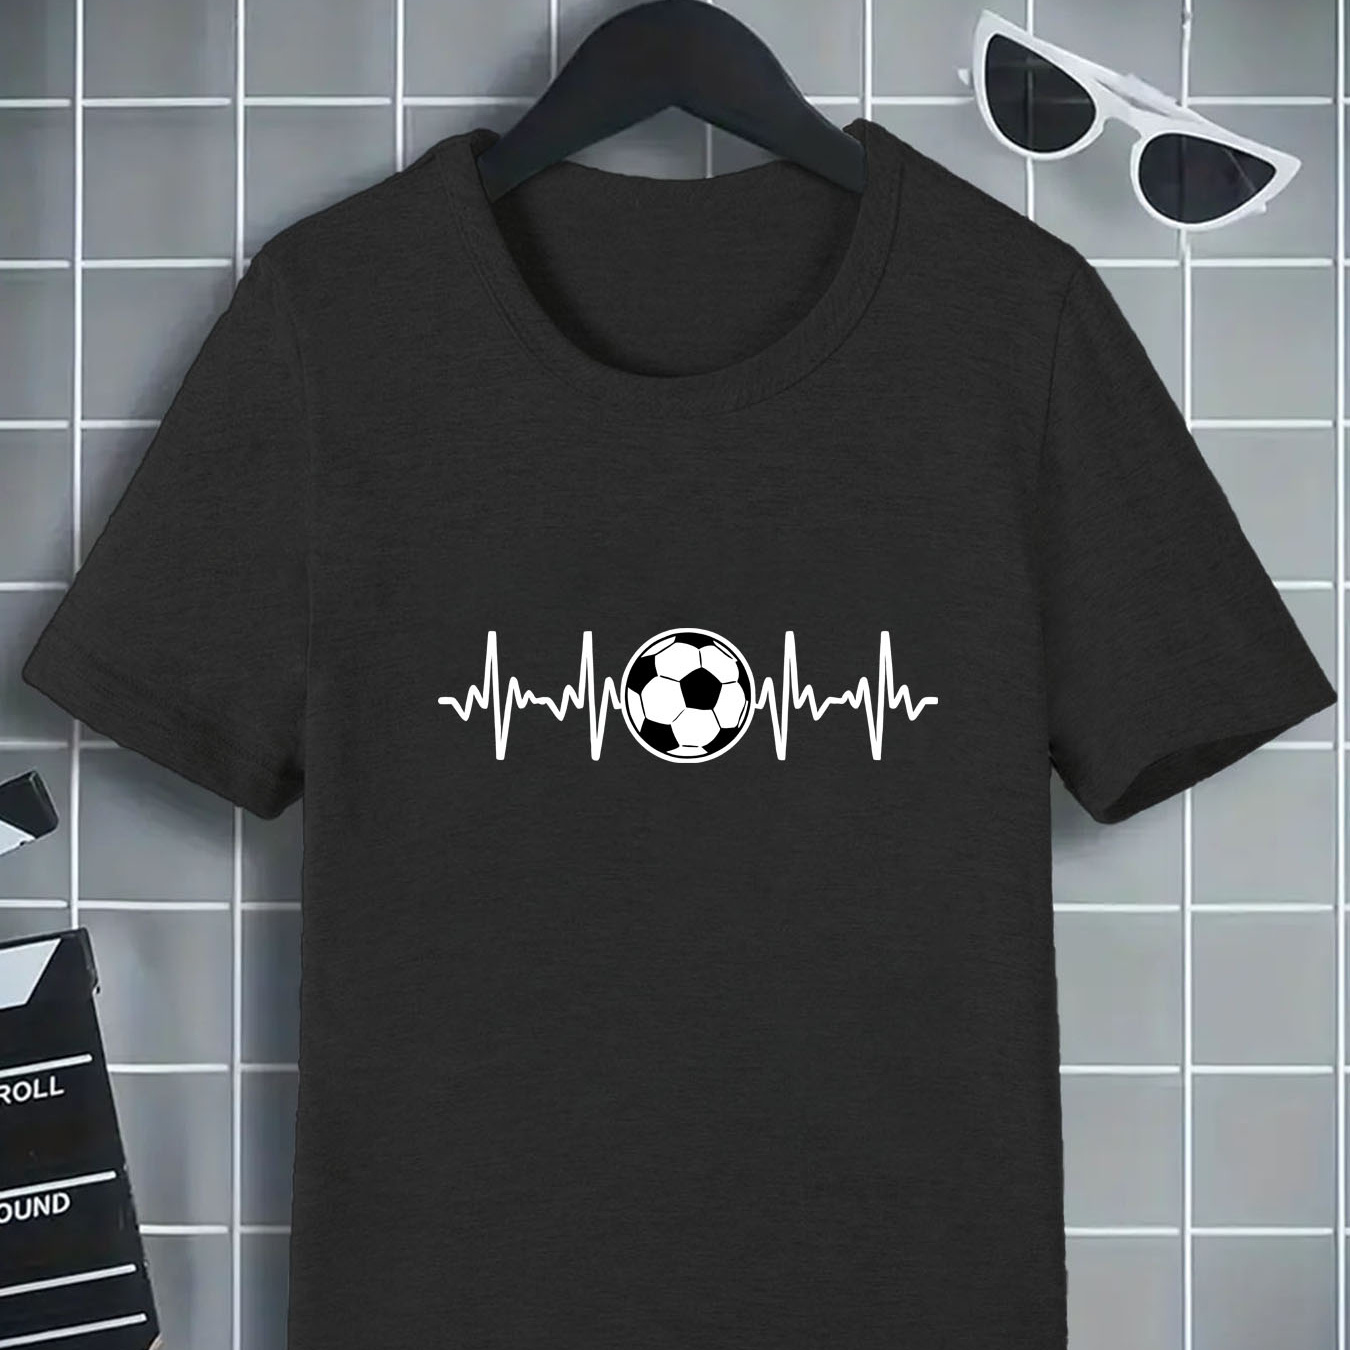 

Soccer Ecg Print Round Neck T-shirt, Short Sleeve Tee Tops, Boy's Summer Spring Clothing